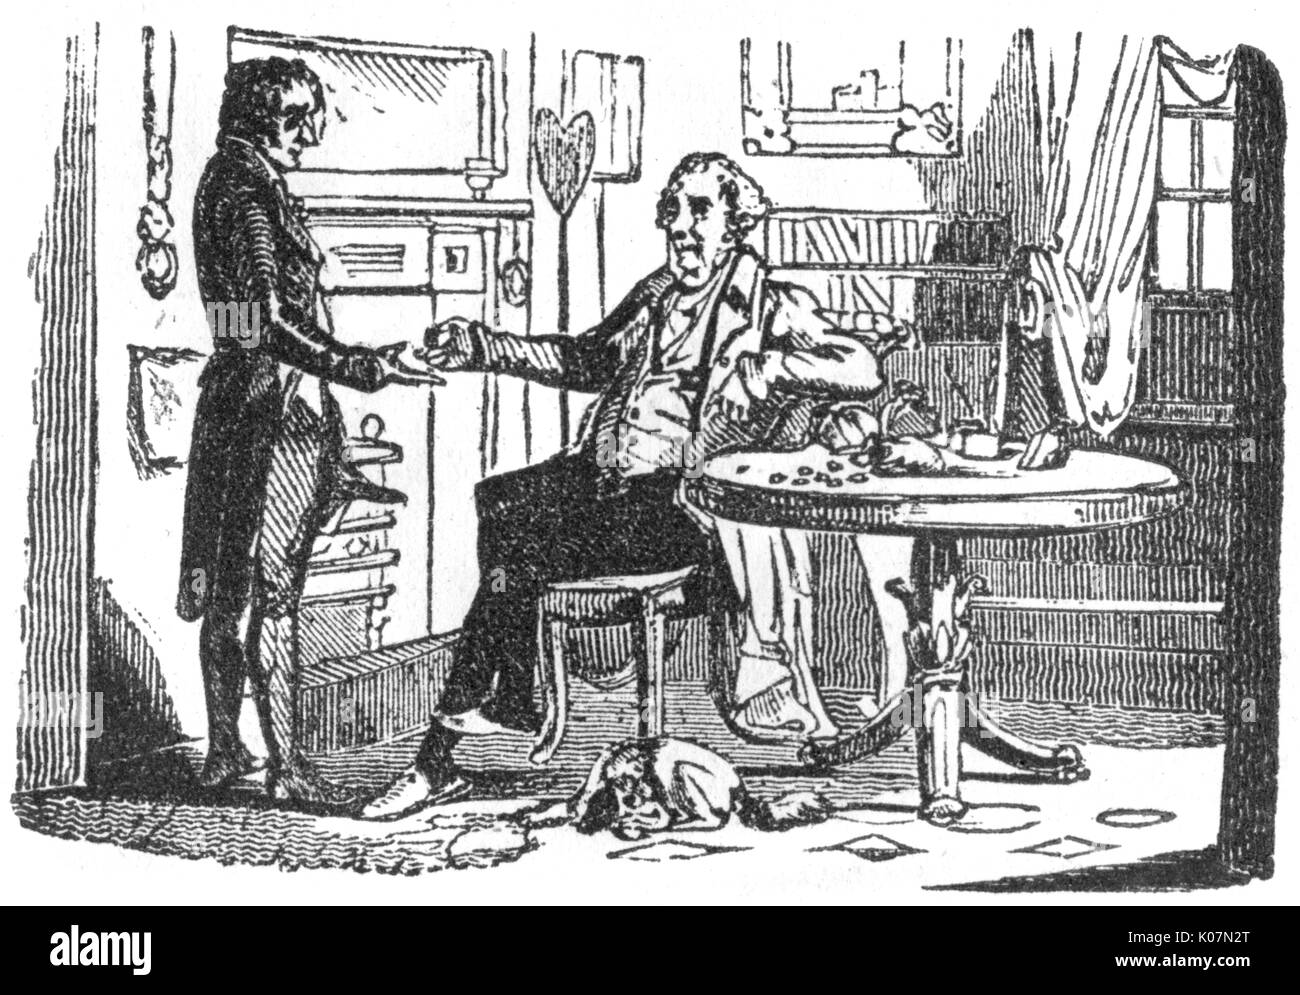 Gentleman paying a tradesman or servant, c1800 Stock Photo